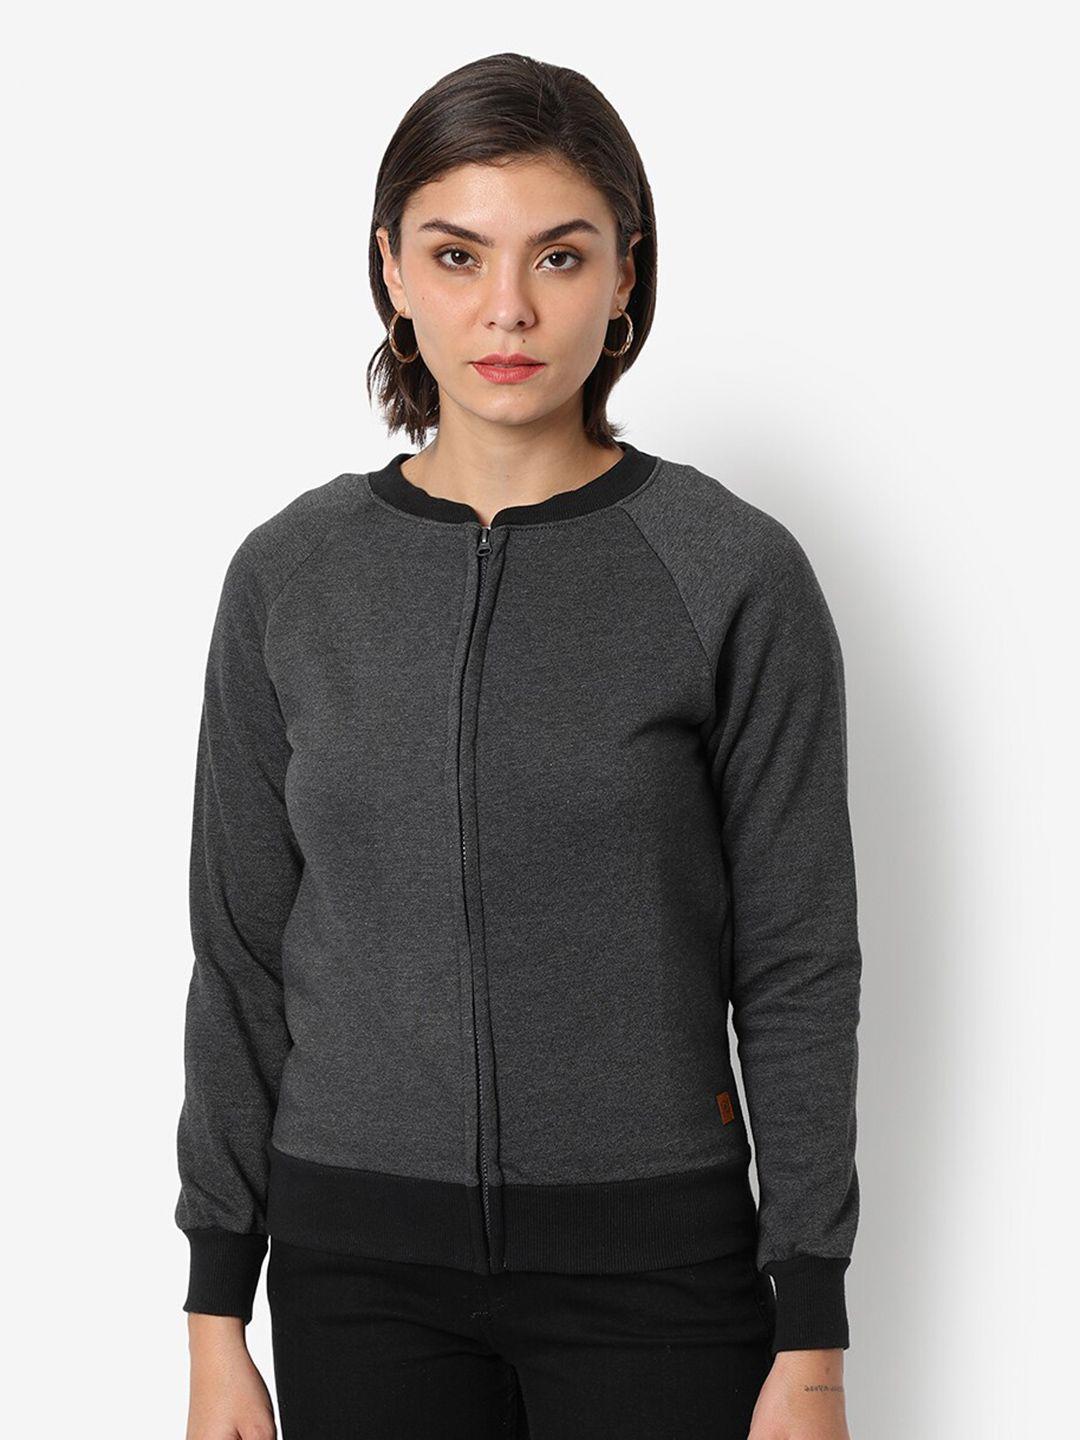 campus-sutra-women-charcoal-solid-zipper-cotton-sweatshirt